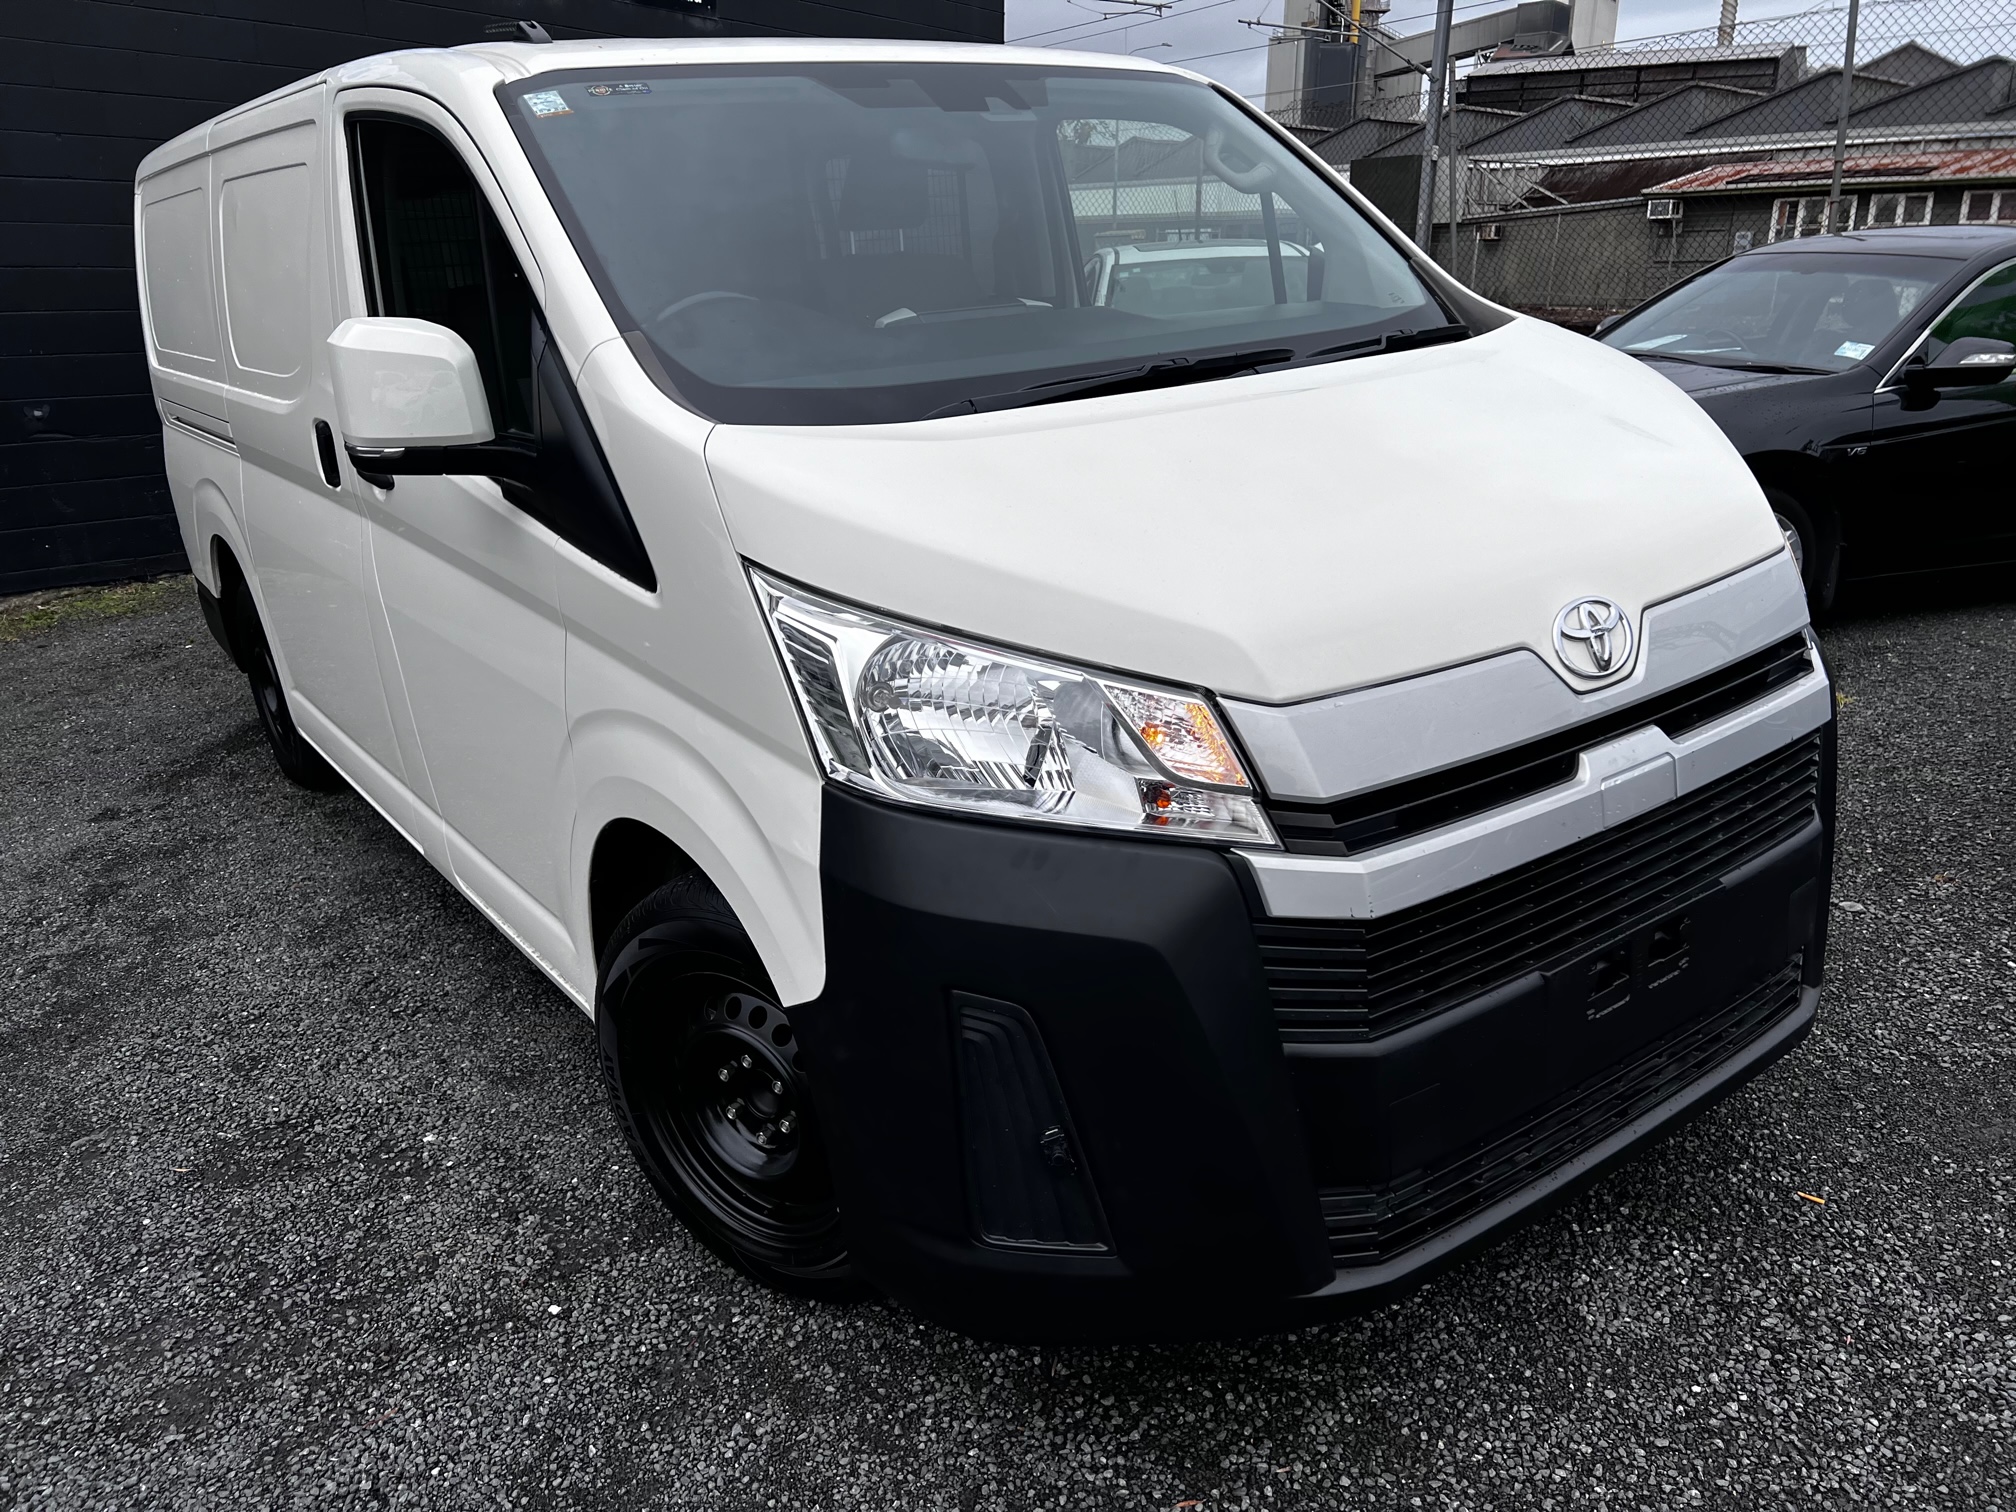 Toyota Hiace 2019 Image 2